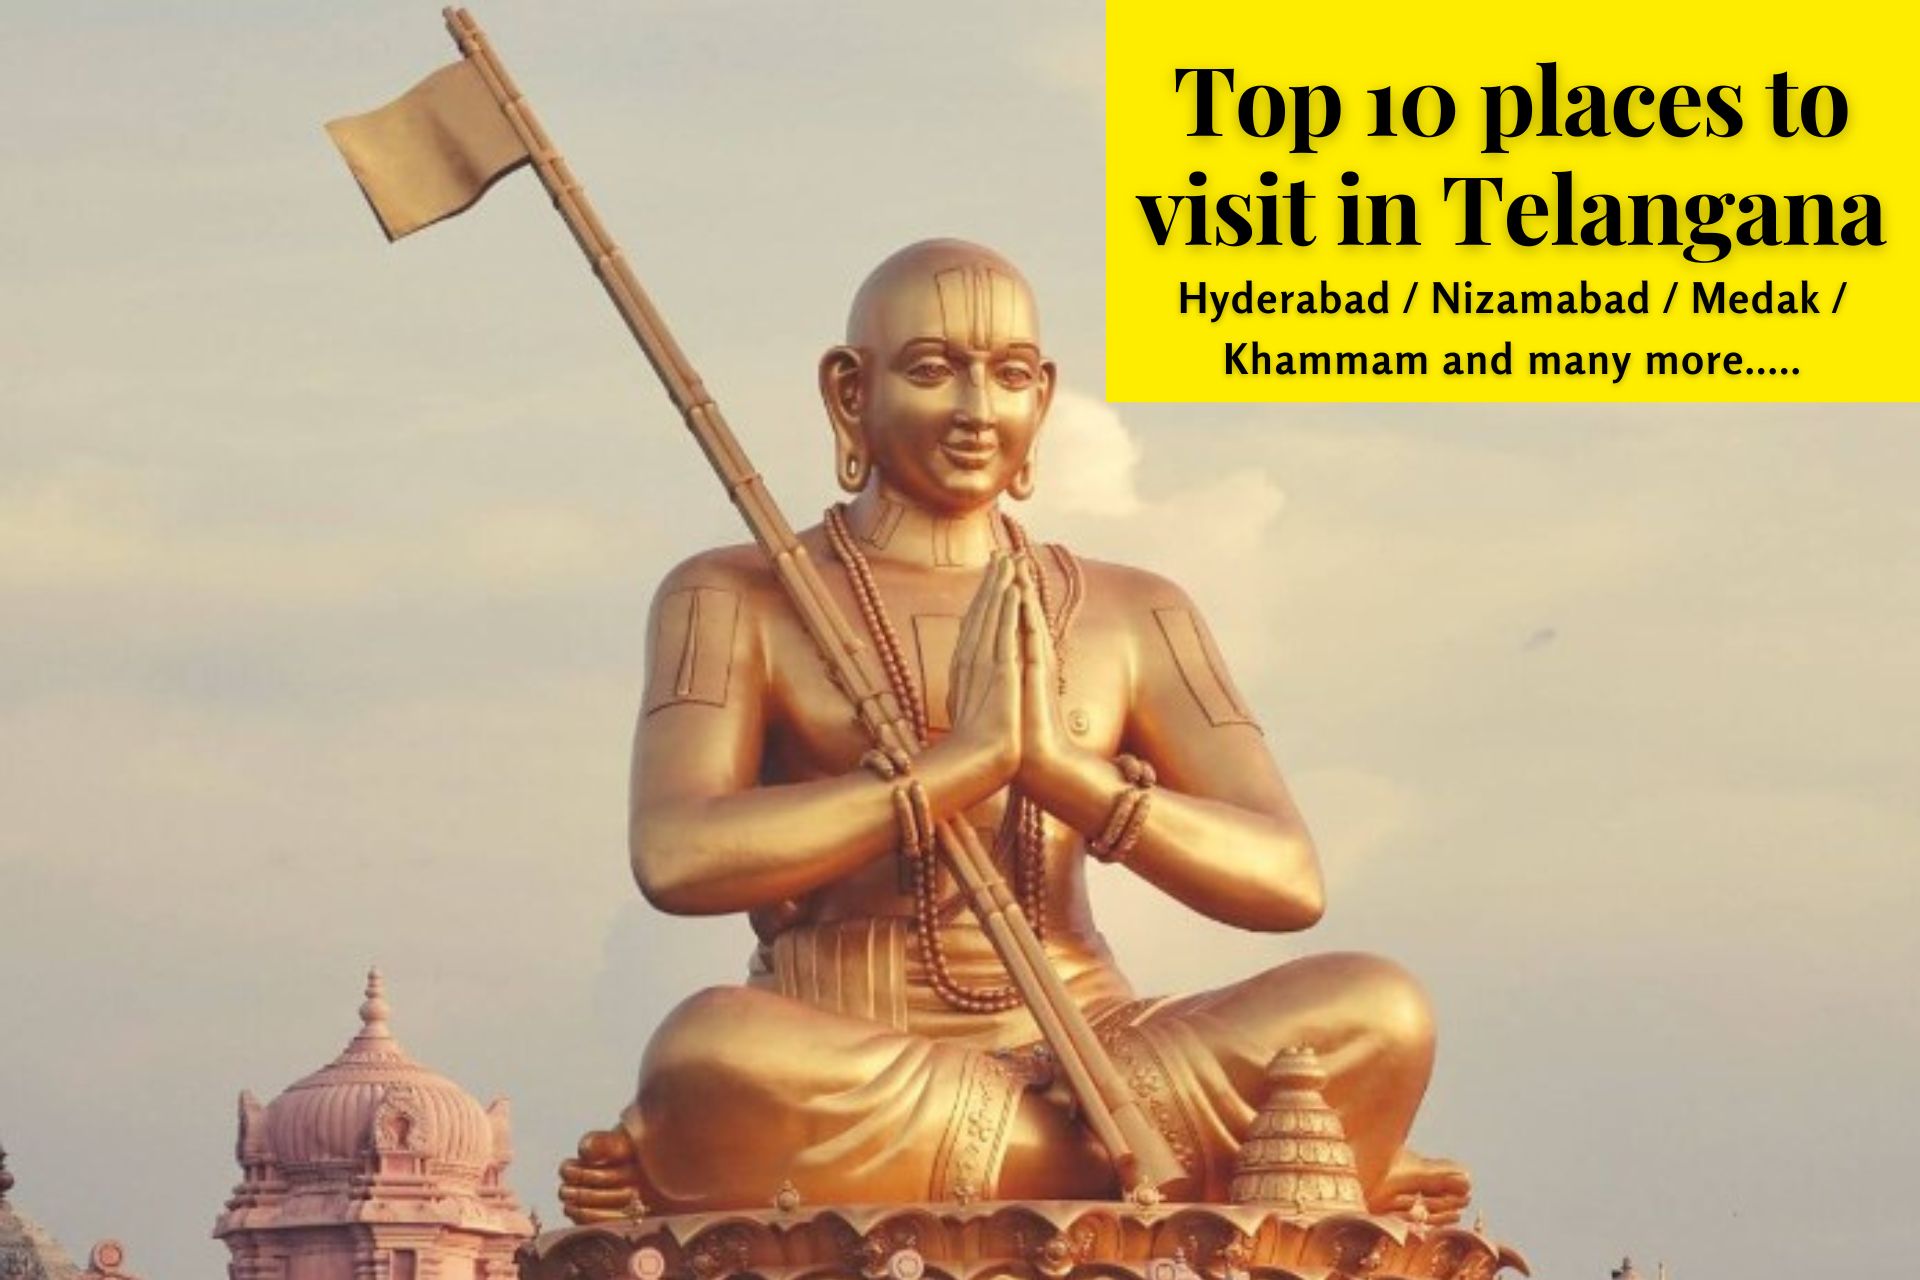 Top 10 places to visit in Telangana